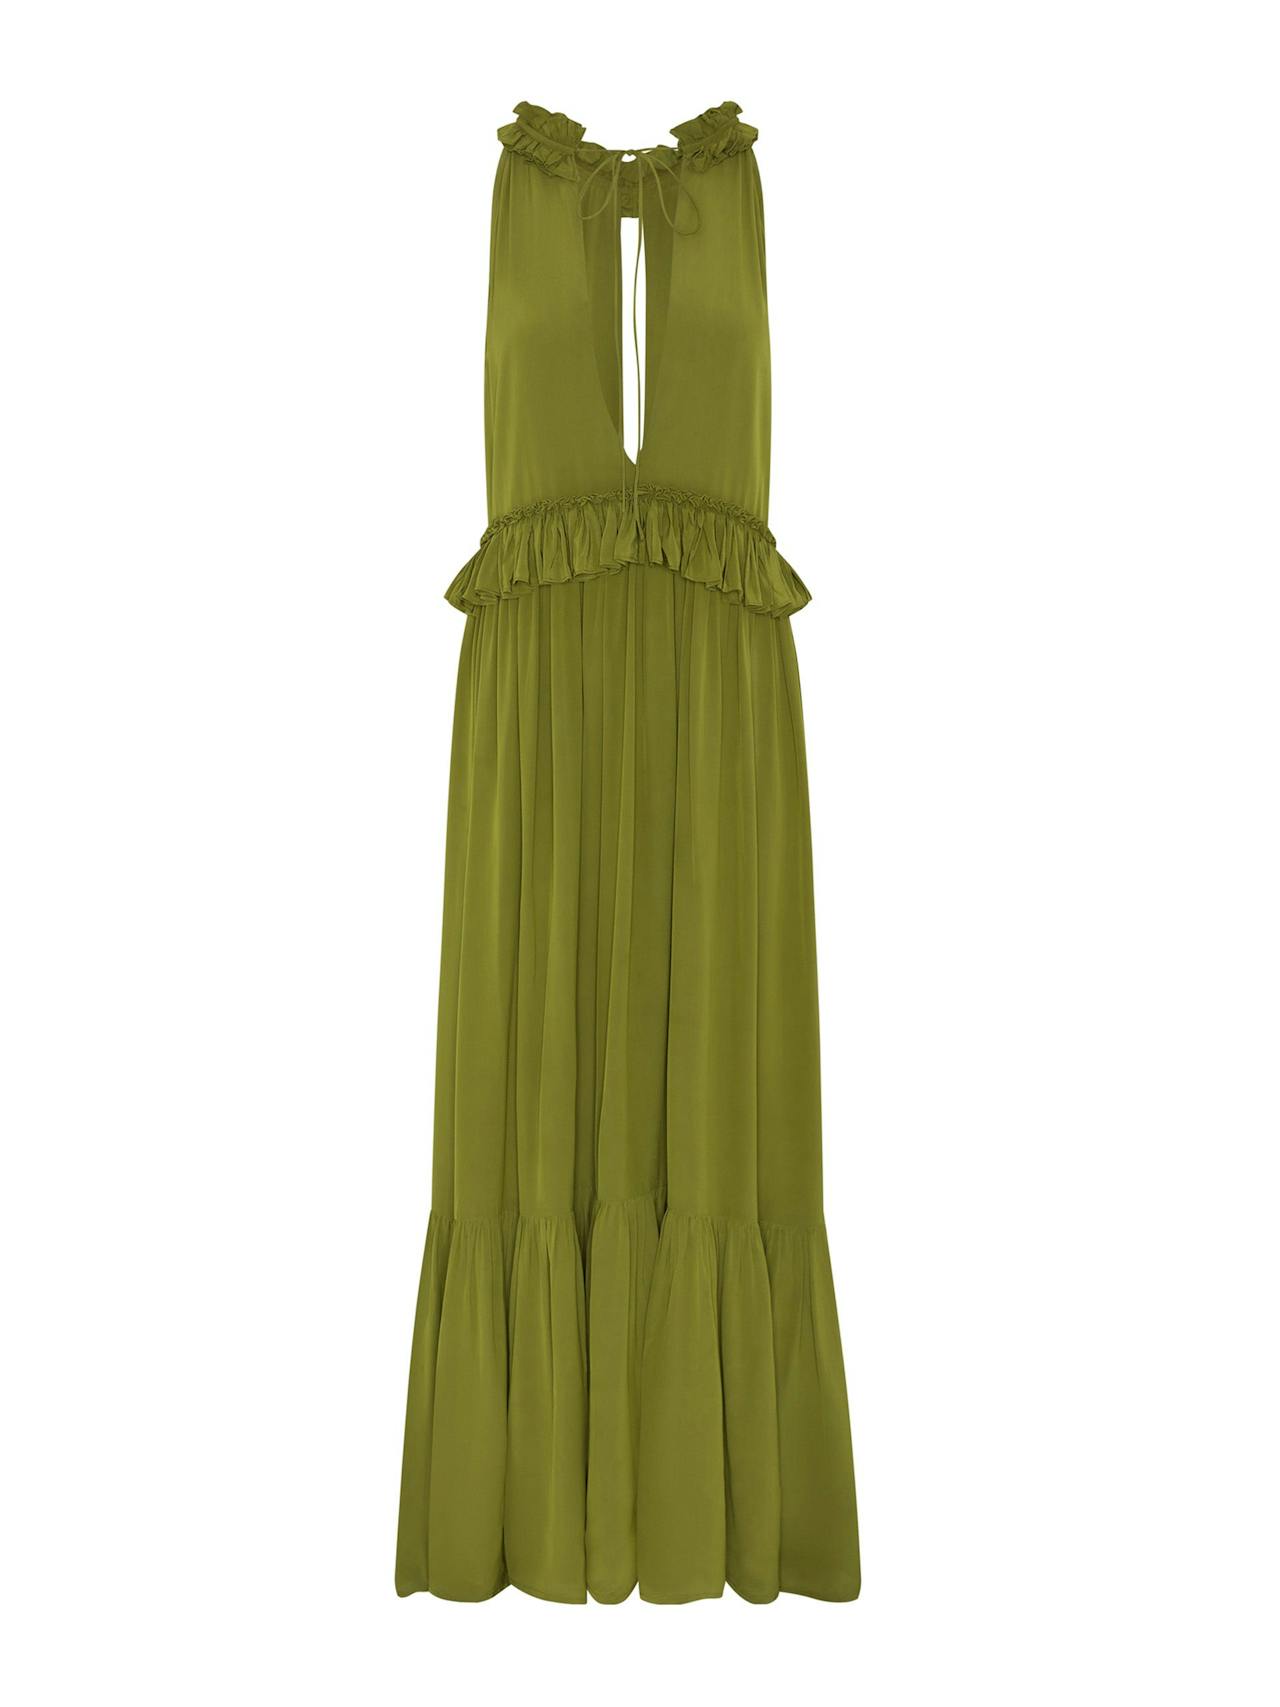 Alegra dress in crepe de chine avocado green